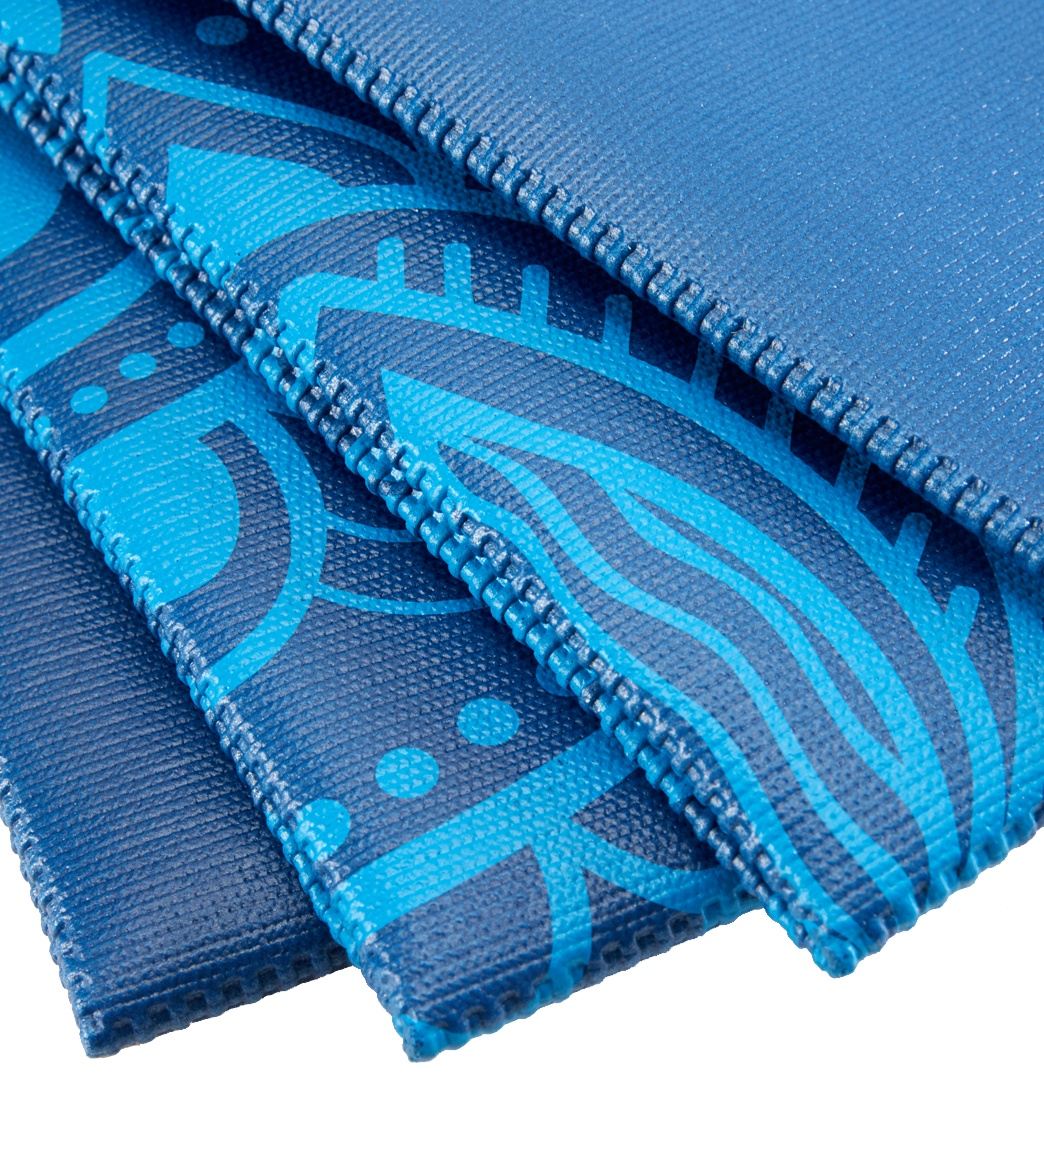 OPENBOX Gaiam Foldable Yoga Mat Blue Sundial 2mm for sale